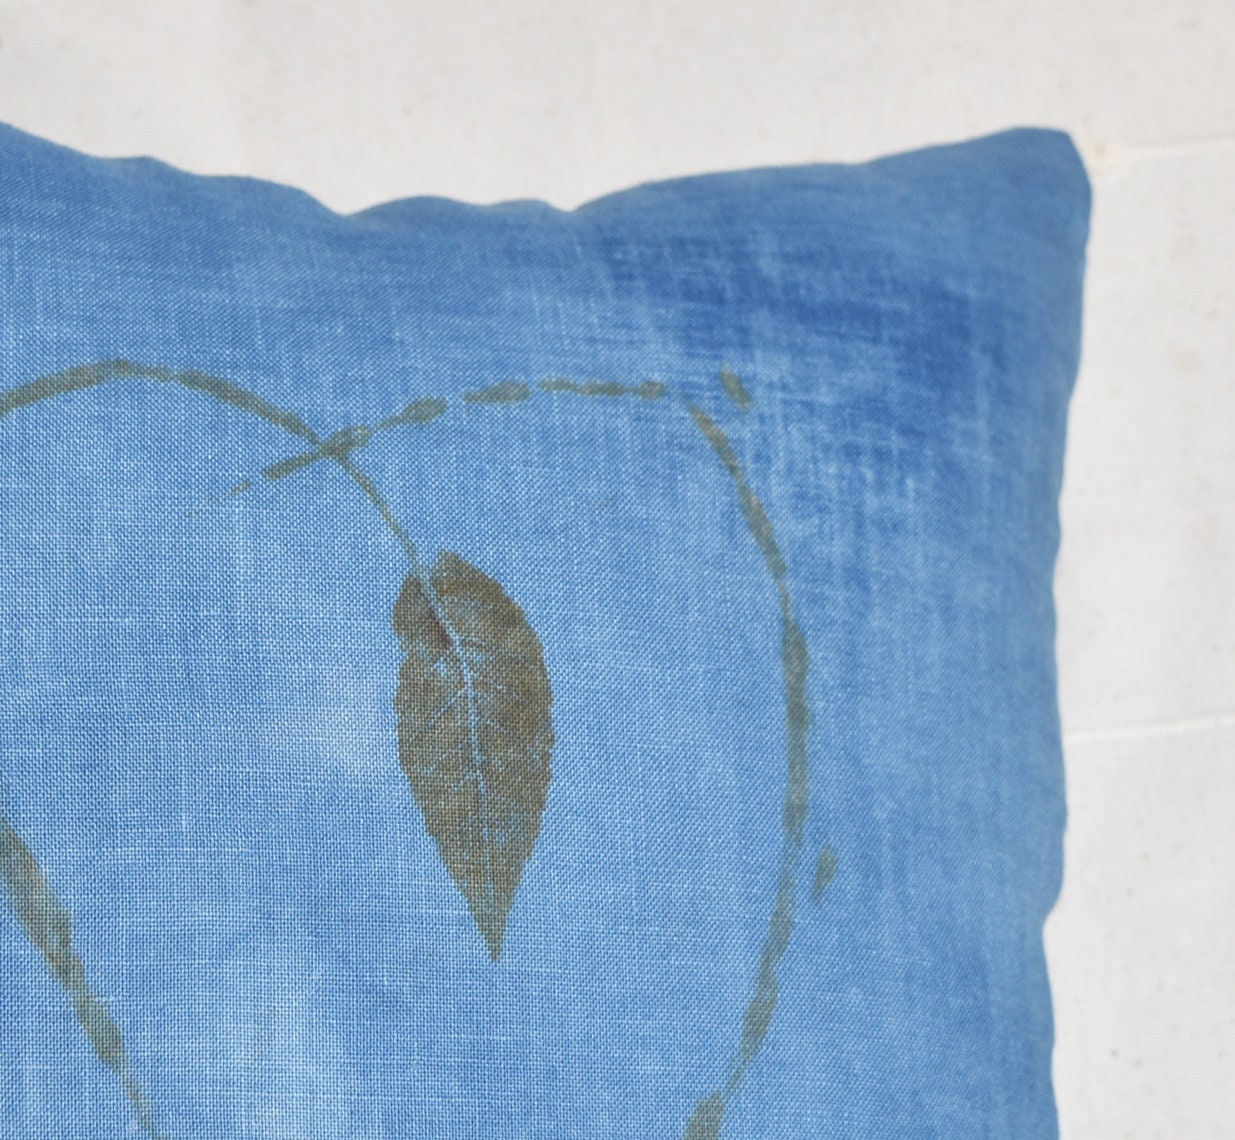 Black Walnut leaf print pillow - Tataki zome - botanical print- indigo